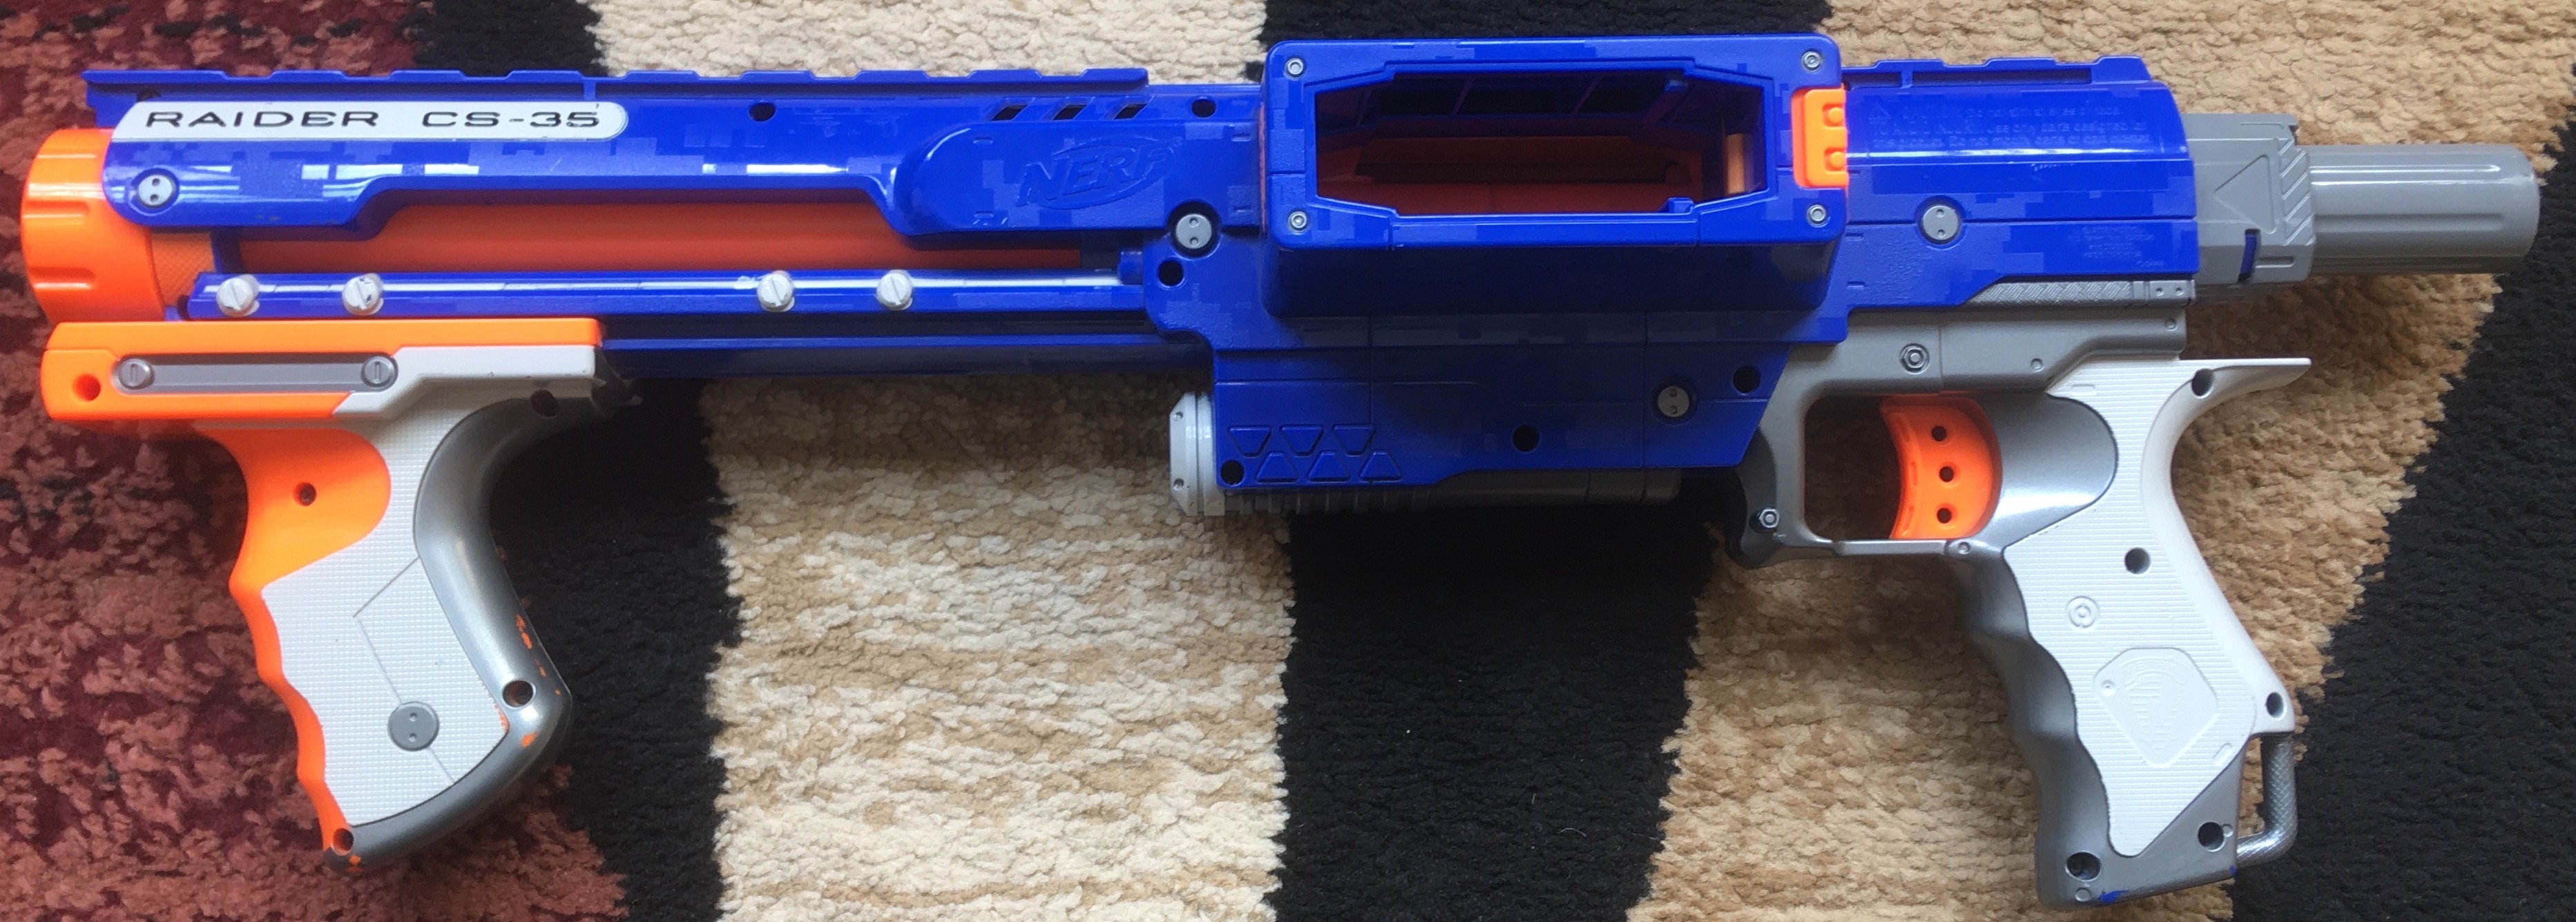 Original Nerf Gun Product